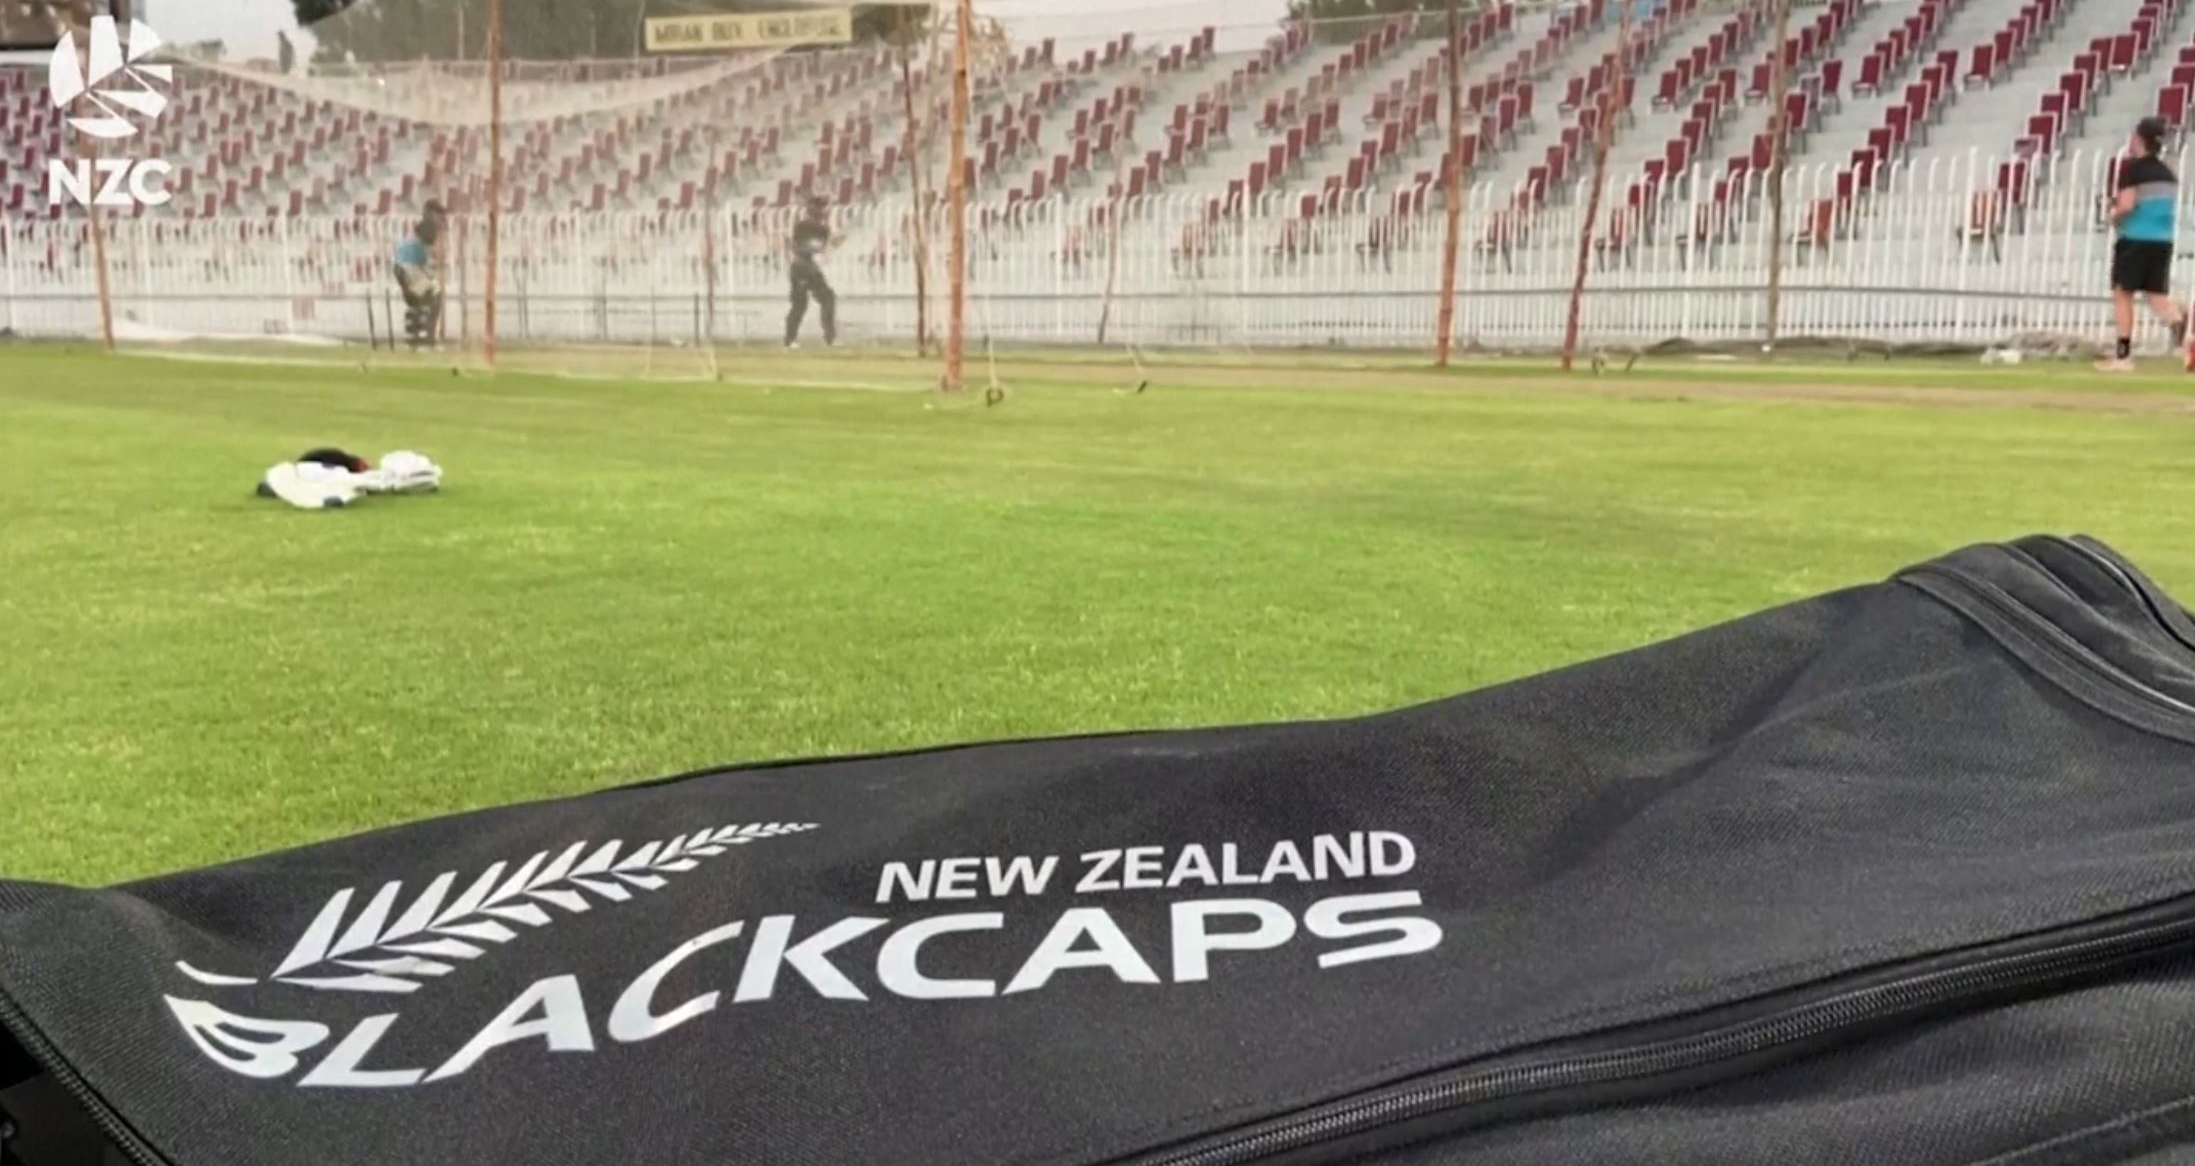 New Zealand Black Caps cricket team practices in Pakistan in this undated handout image taken from video. New Zealand Cricket Handout via Reuters